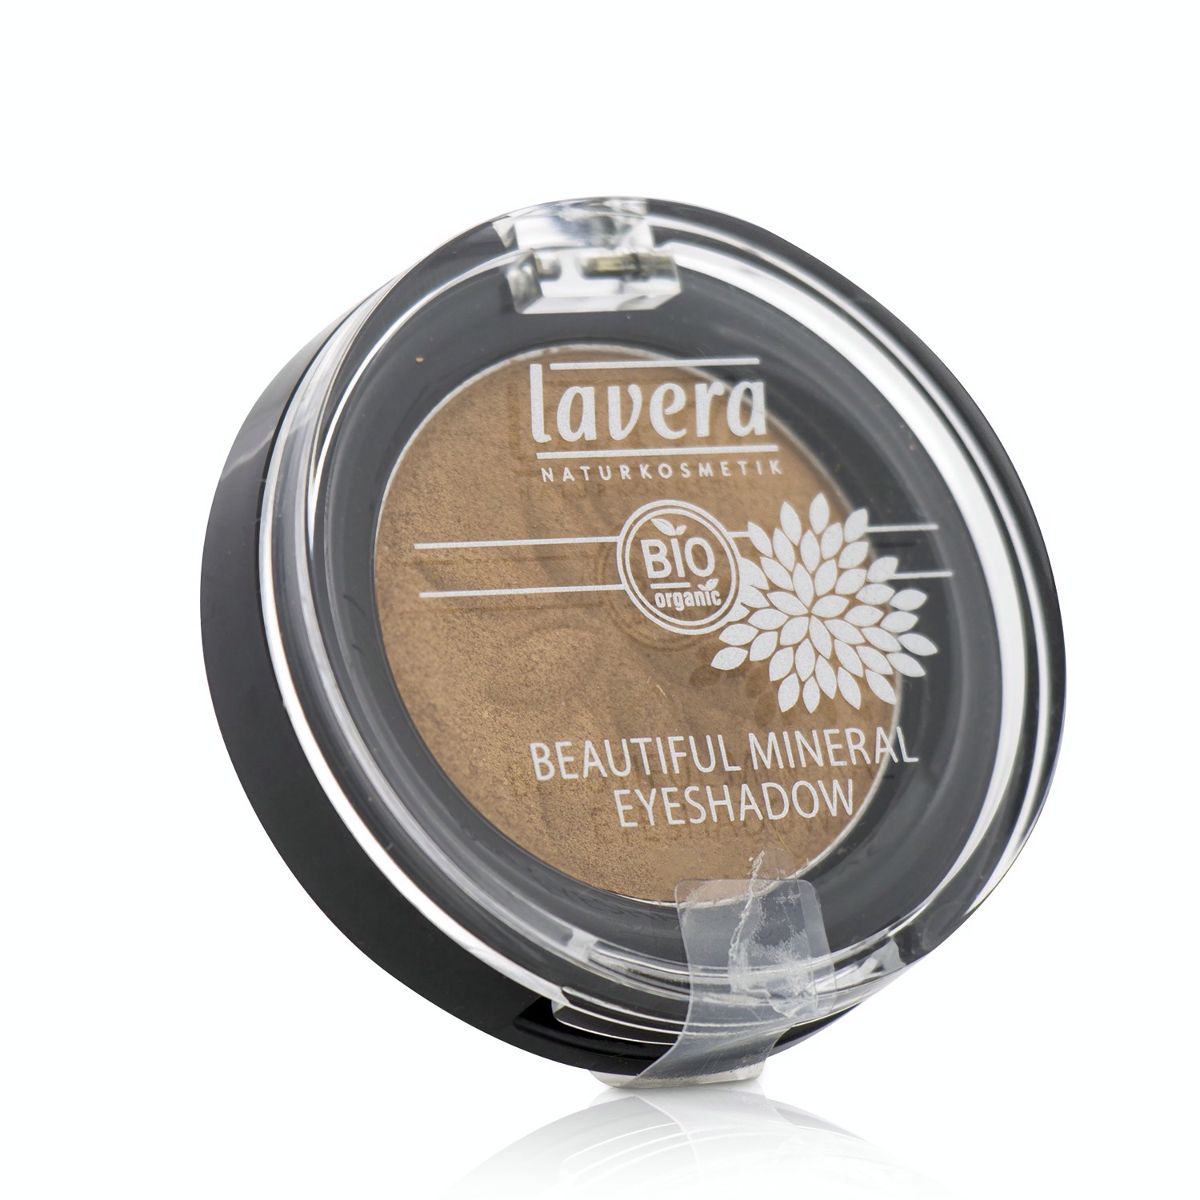 Beautiful Mineral Eyeshadow - # 25 Golden Copper Lavera Image